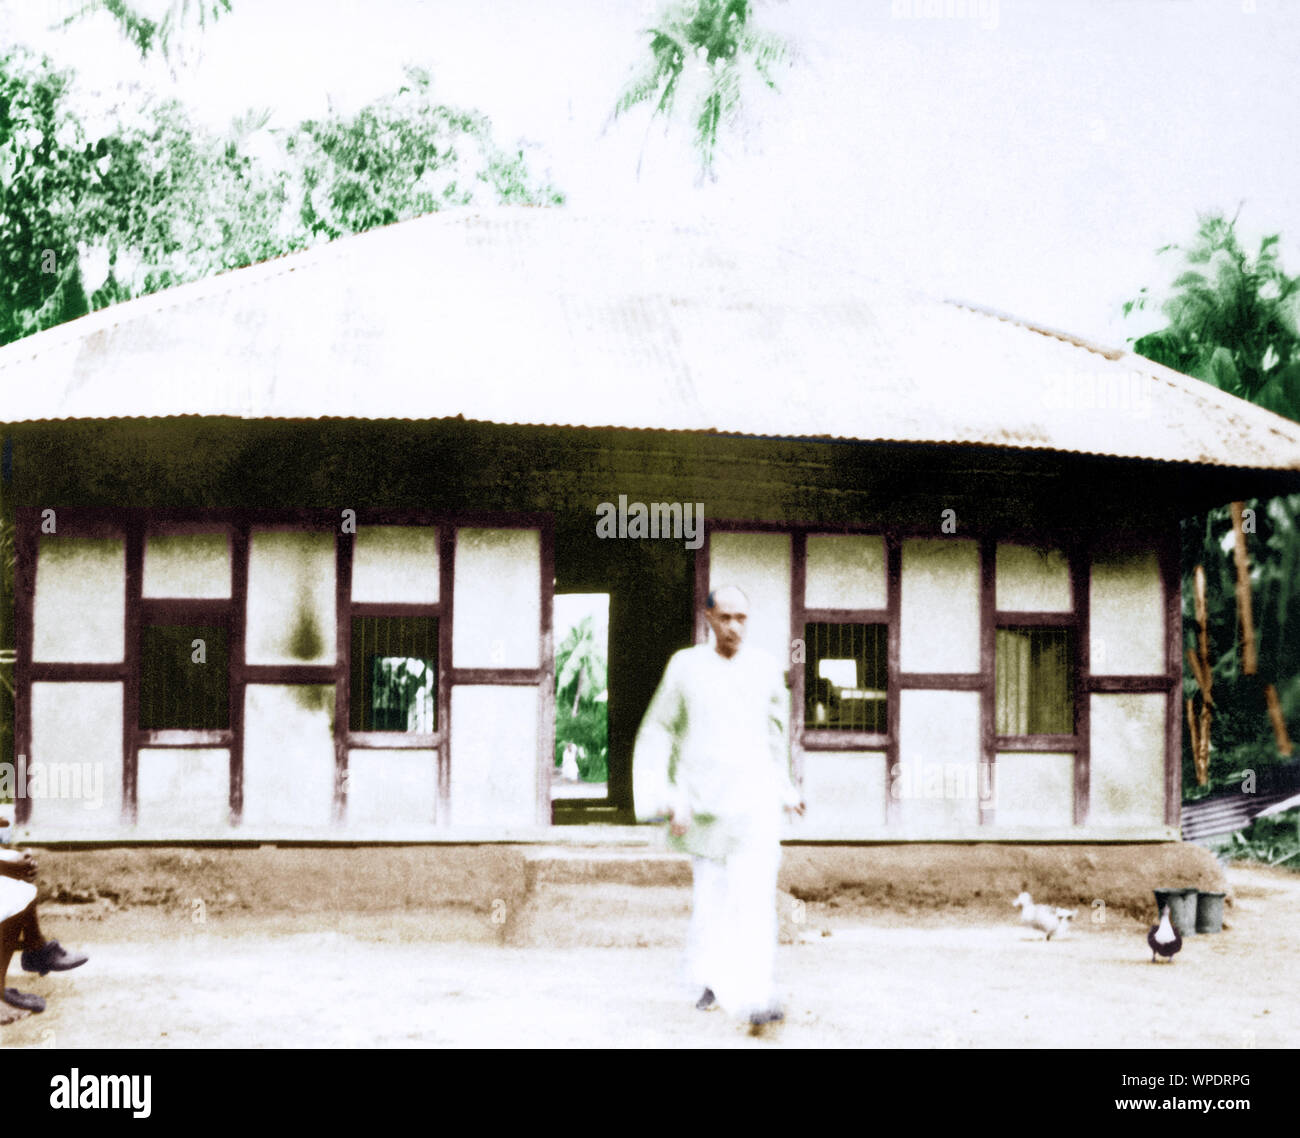 Prof Nirmal Kumar Bose leaving hut, Srirampur, East Bengal, Bangladesh, Asia, 1946 Stock Photo